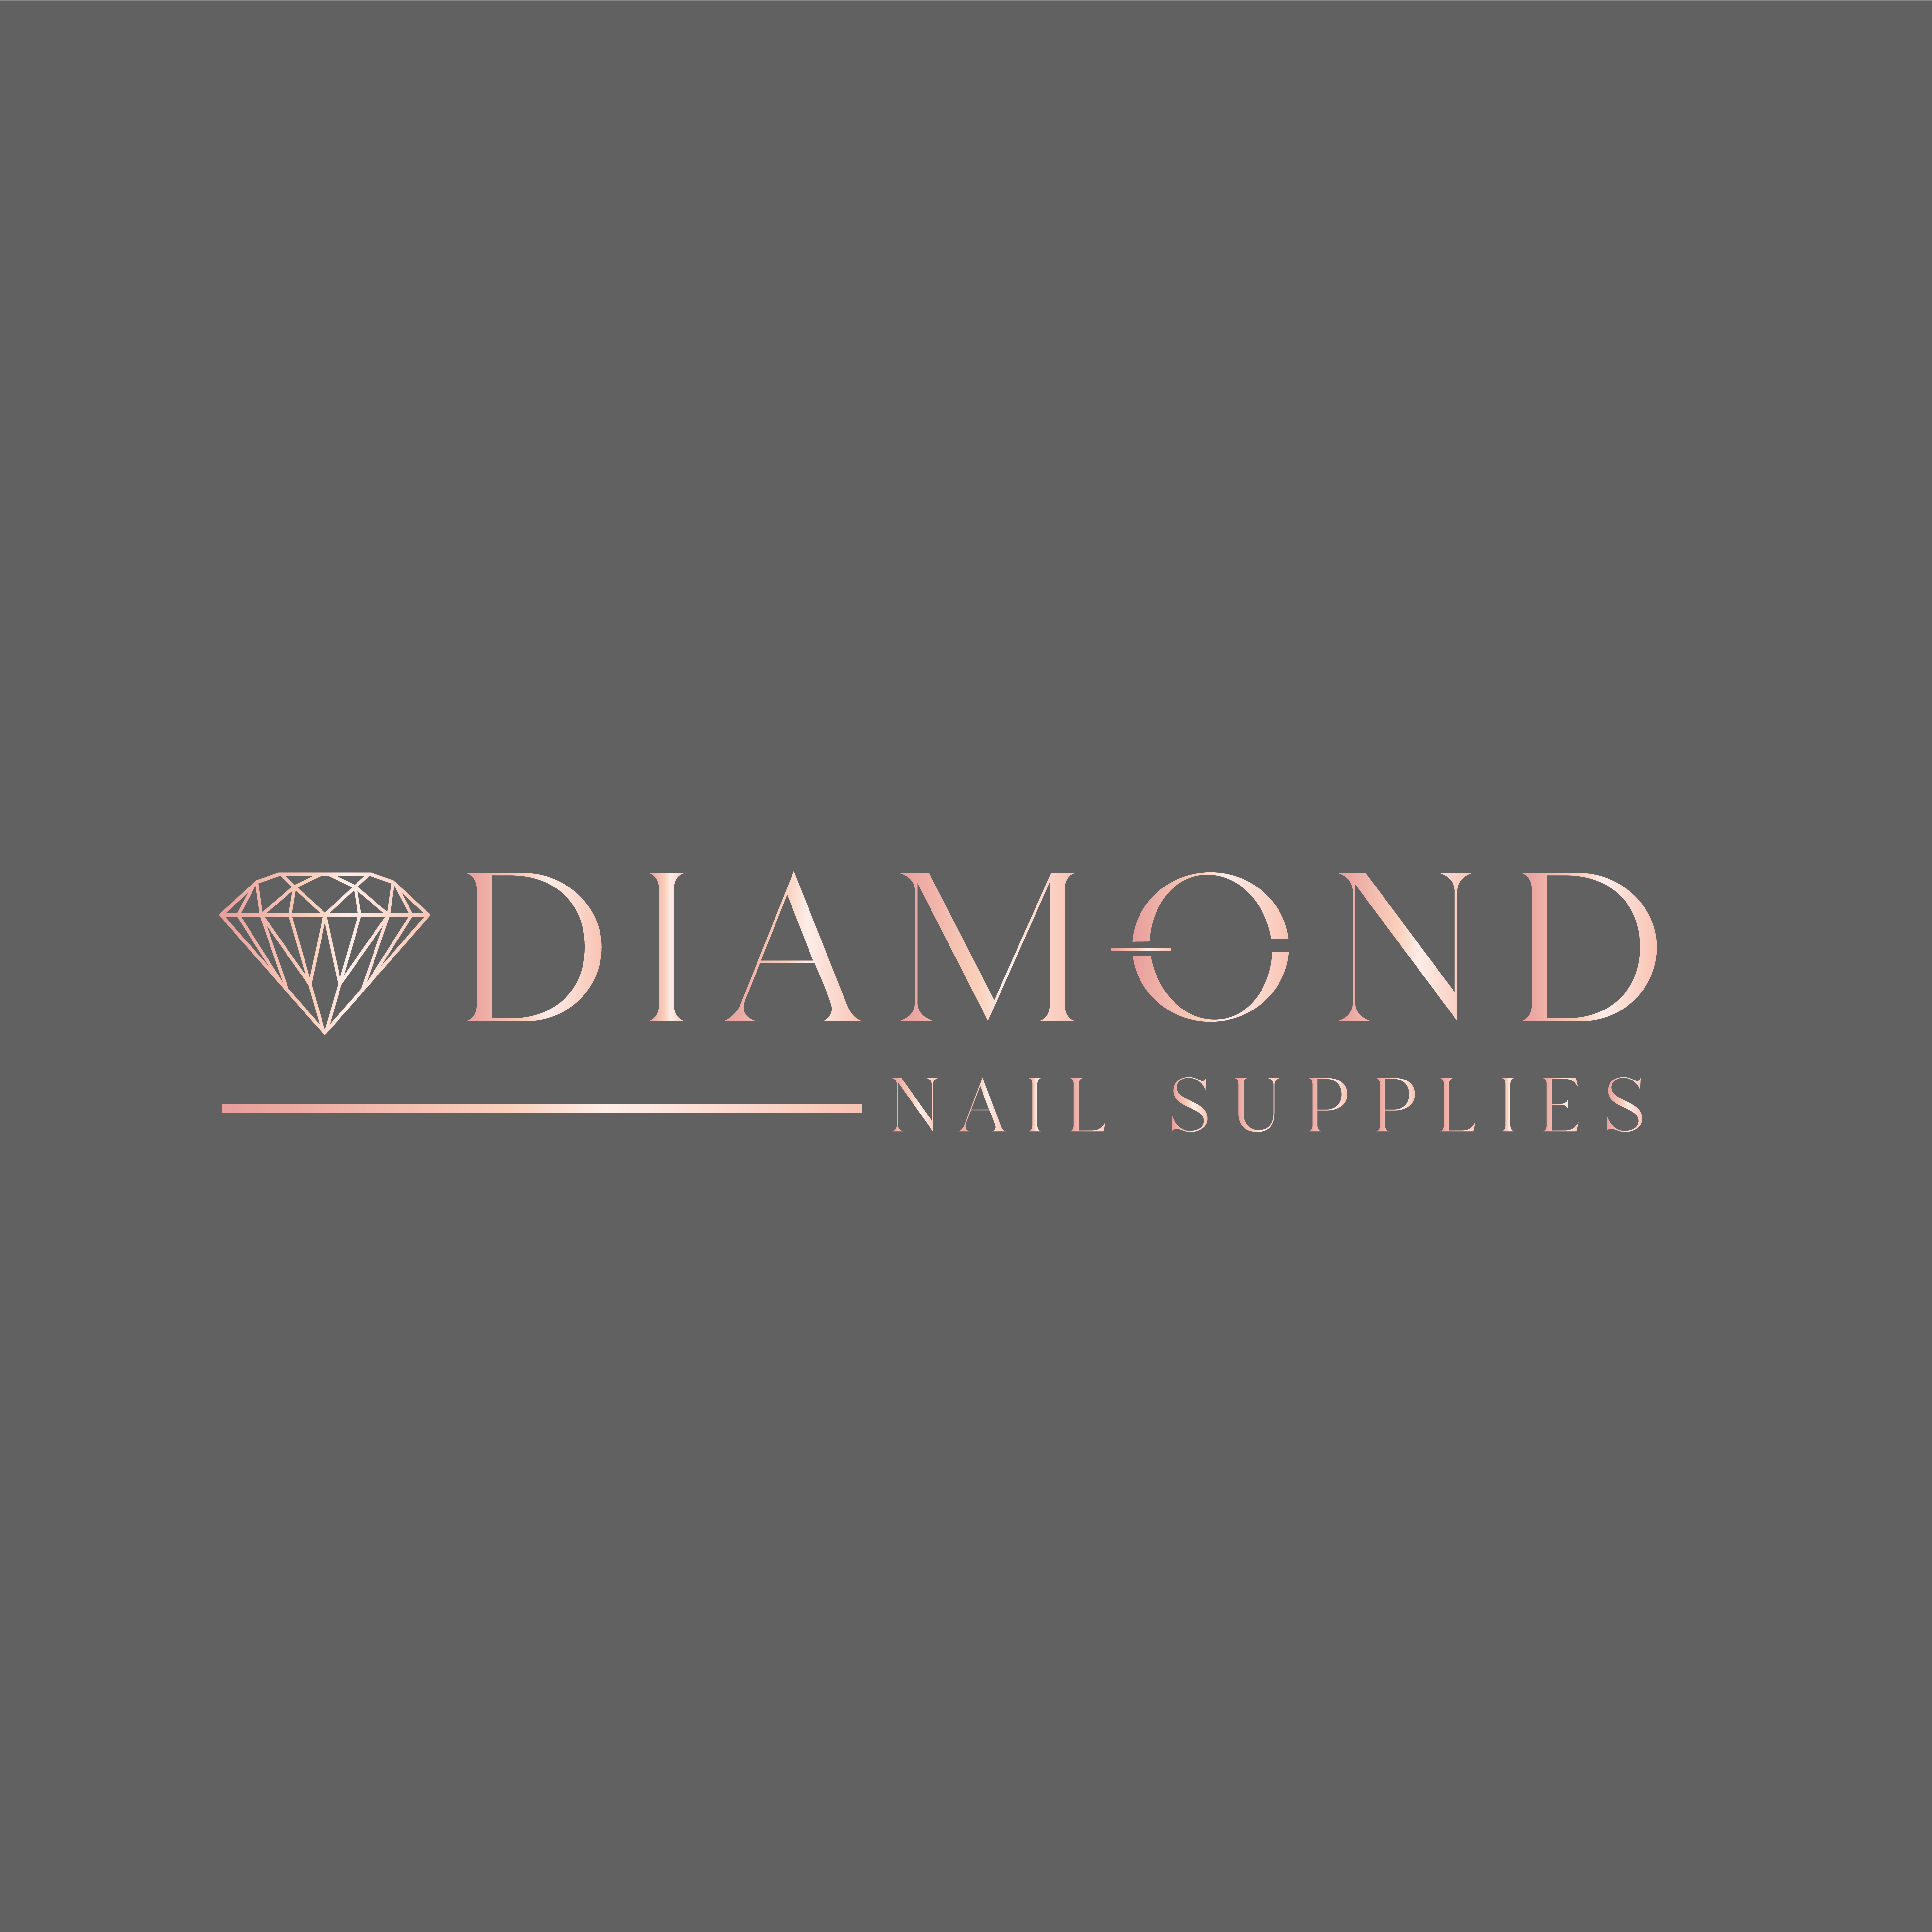 DiamondNail Supplies Coupon Codes